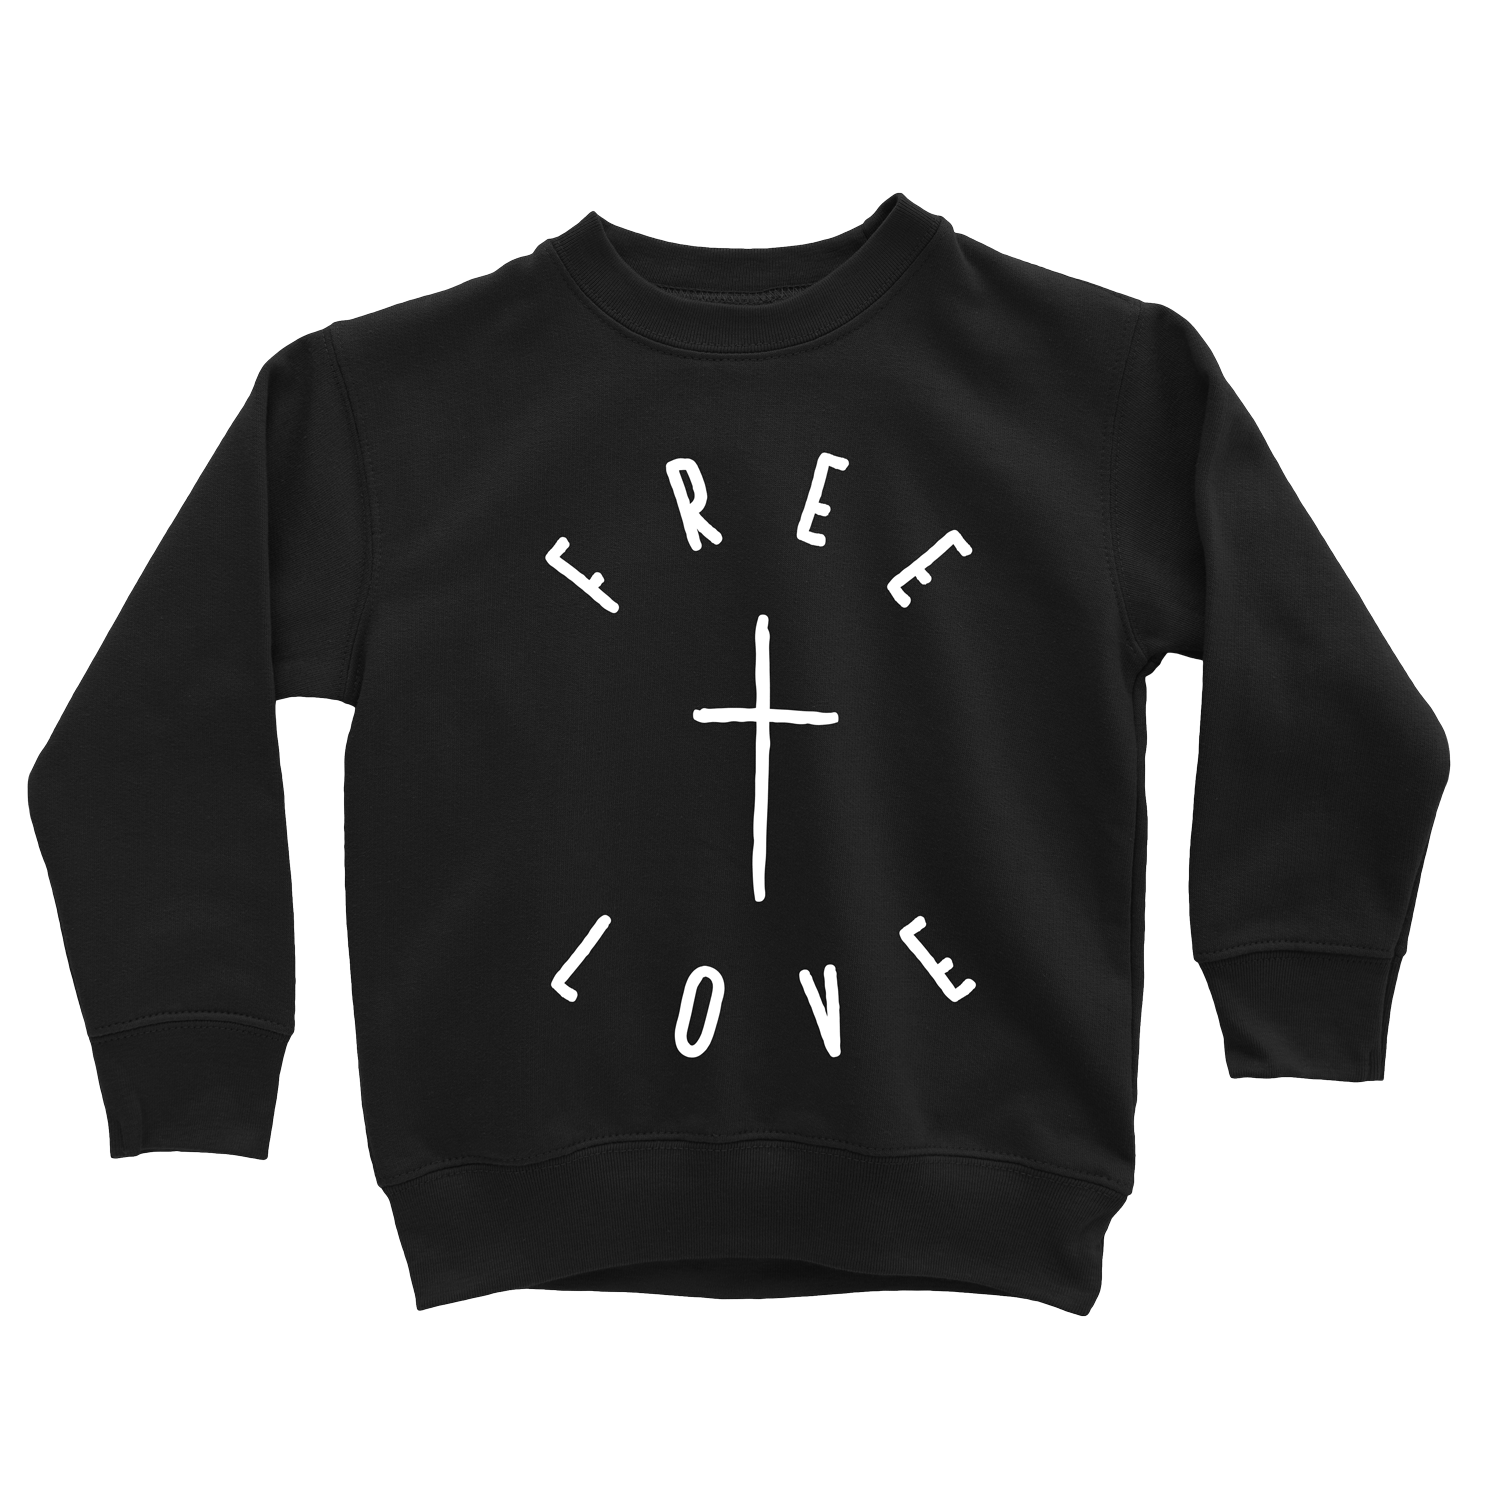 Free Love Sweatshirt - Beacon Threads - 2T / Black w/ White Lettering - 3